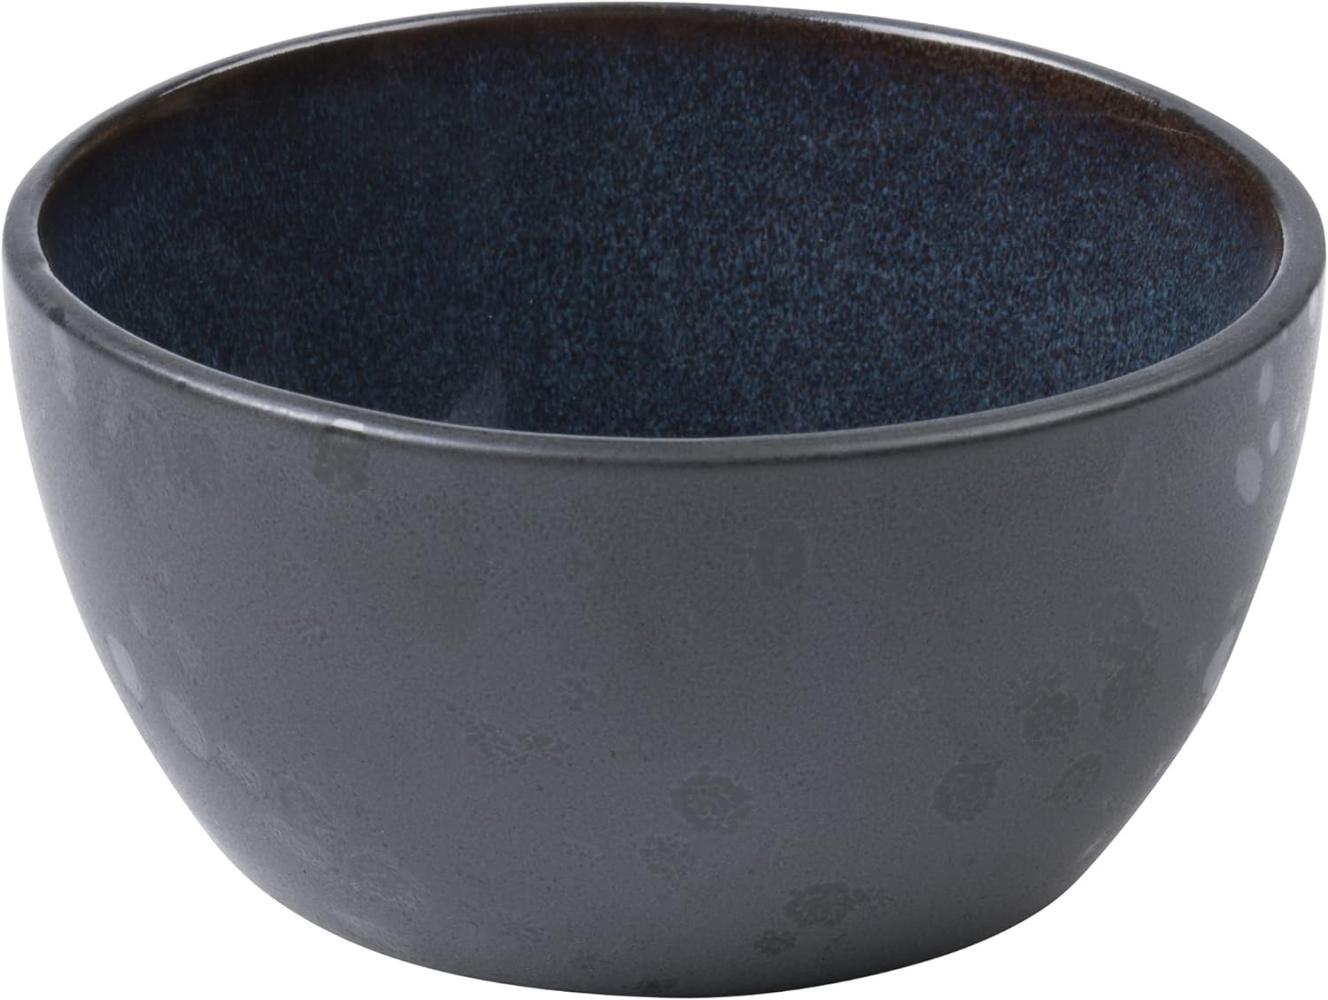 Bitz Bowl black/dark blue 10 cm Bild 1